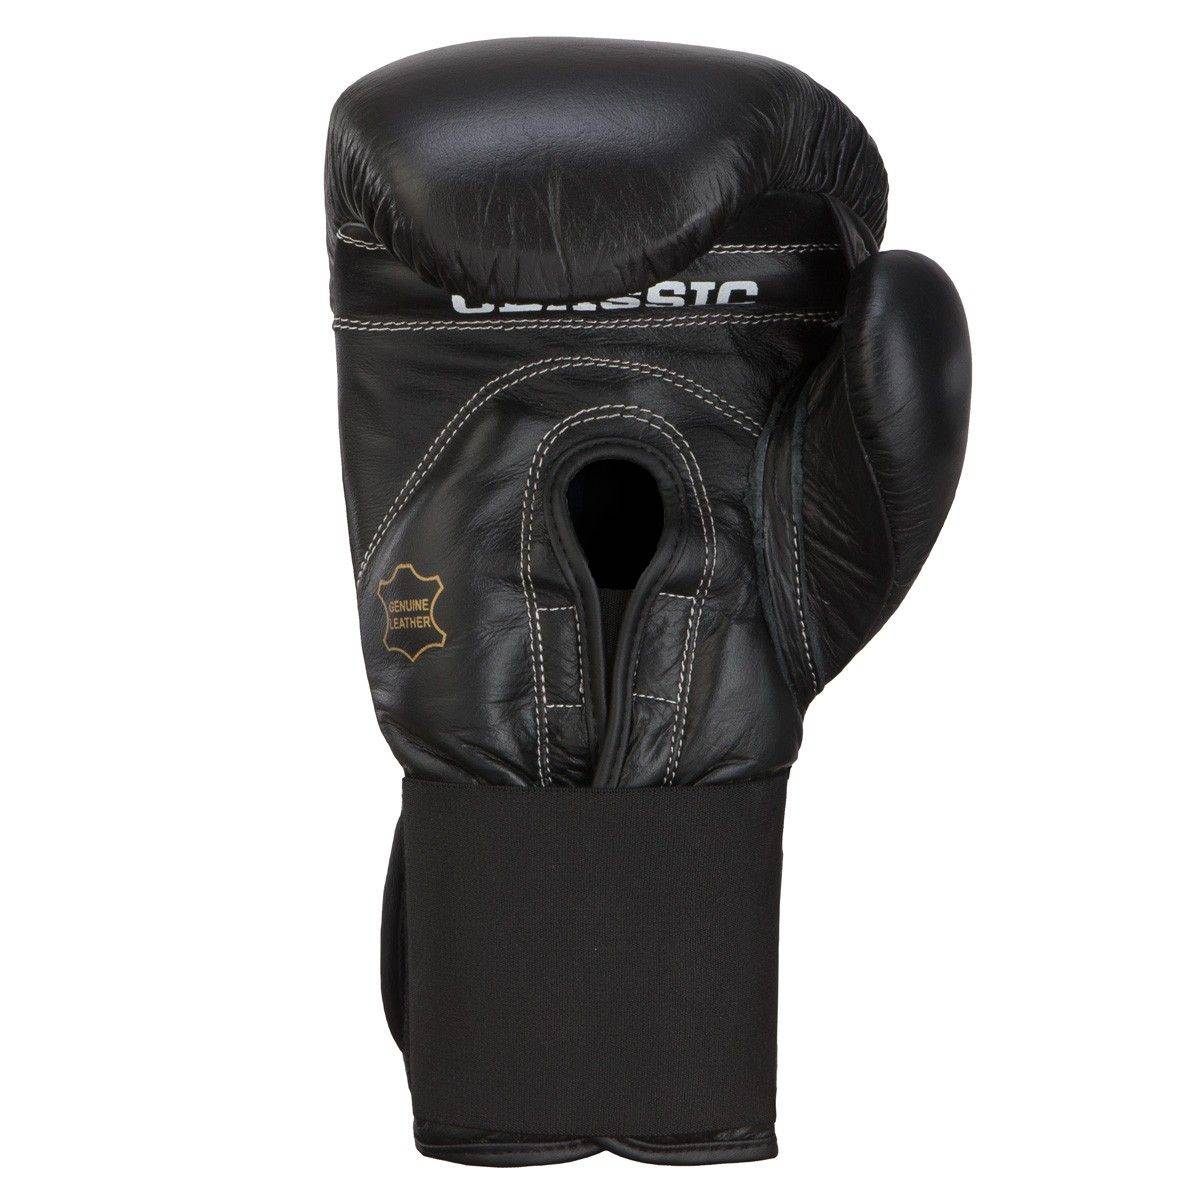 Боксерські рукавички TITLE Classic Leather Elastic 2.0-14